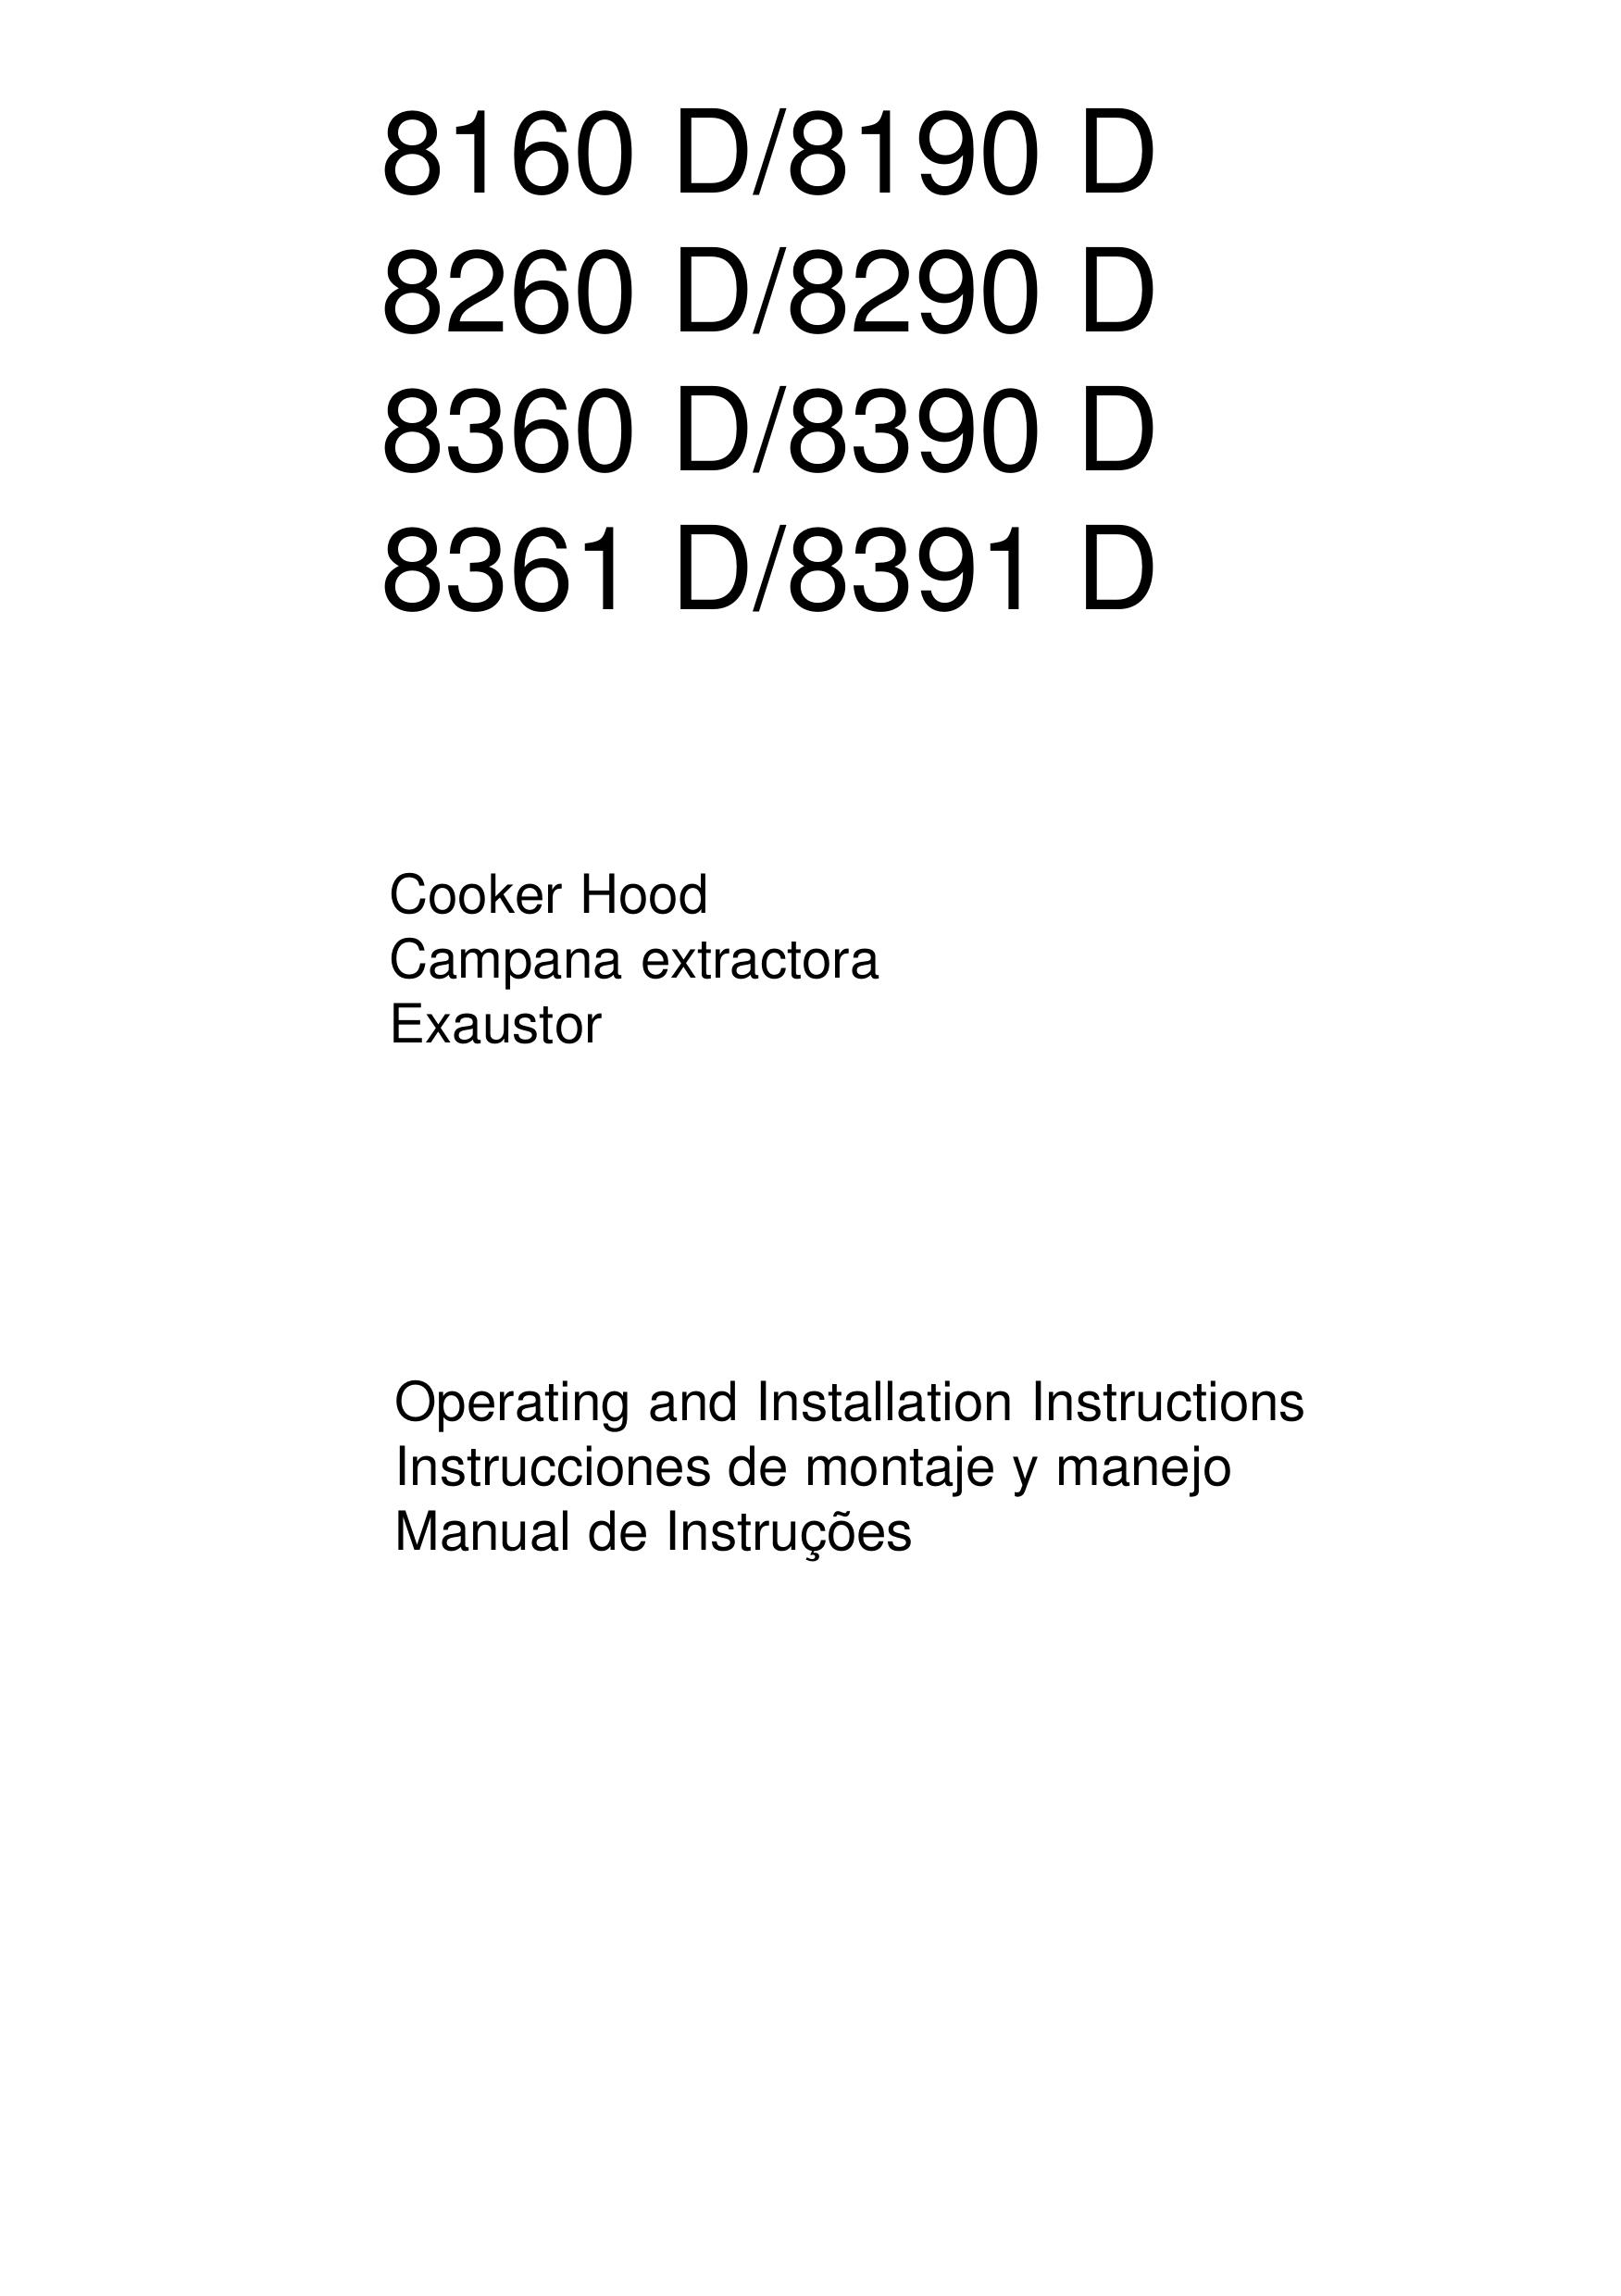 AEG 8190 D Ventilation Hood User Manual